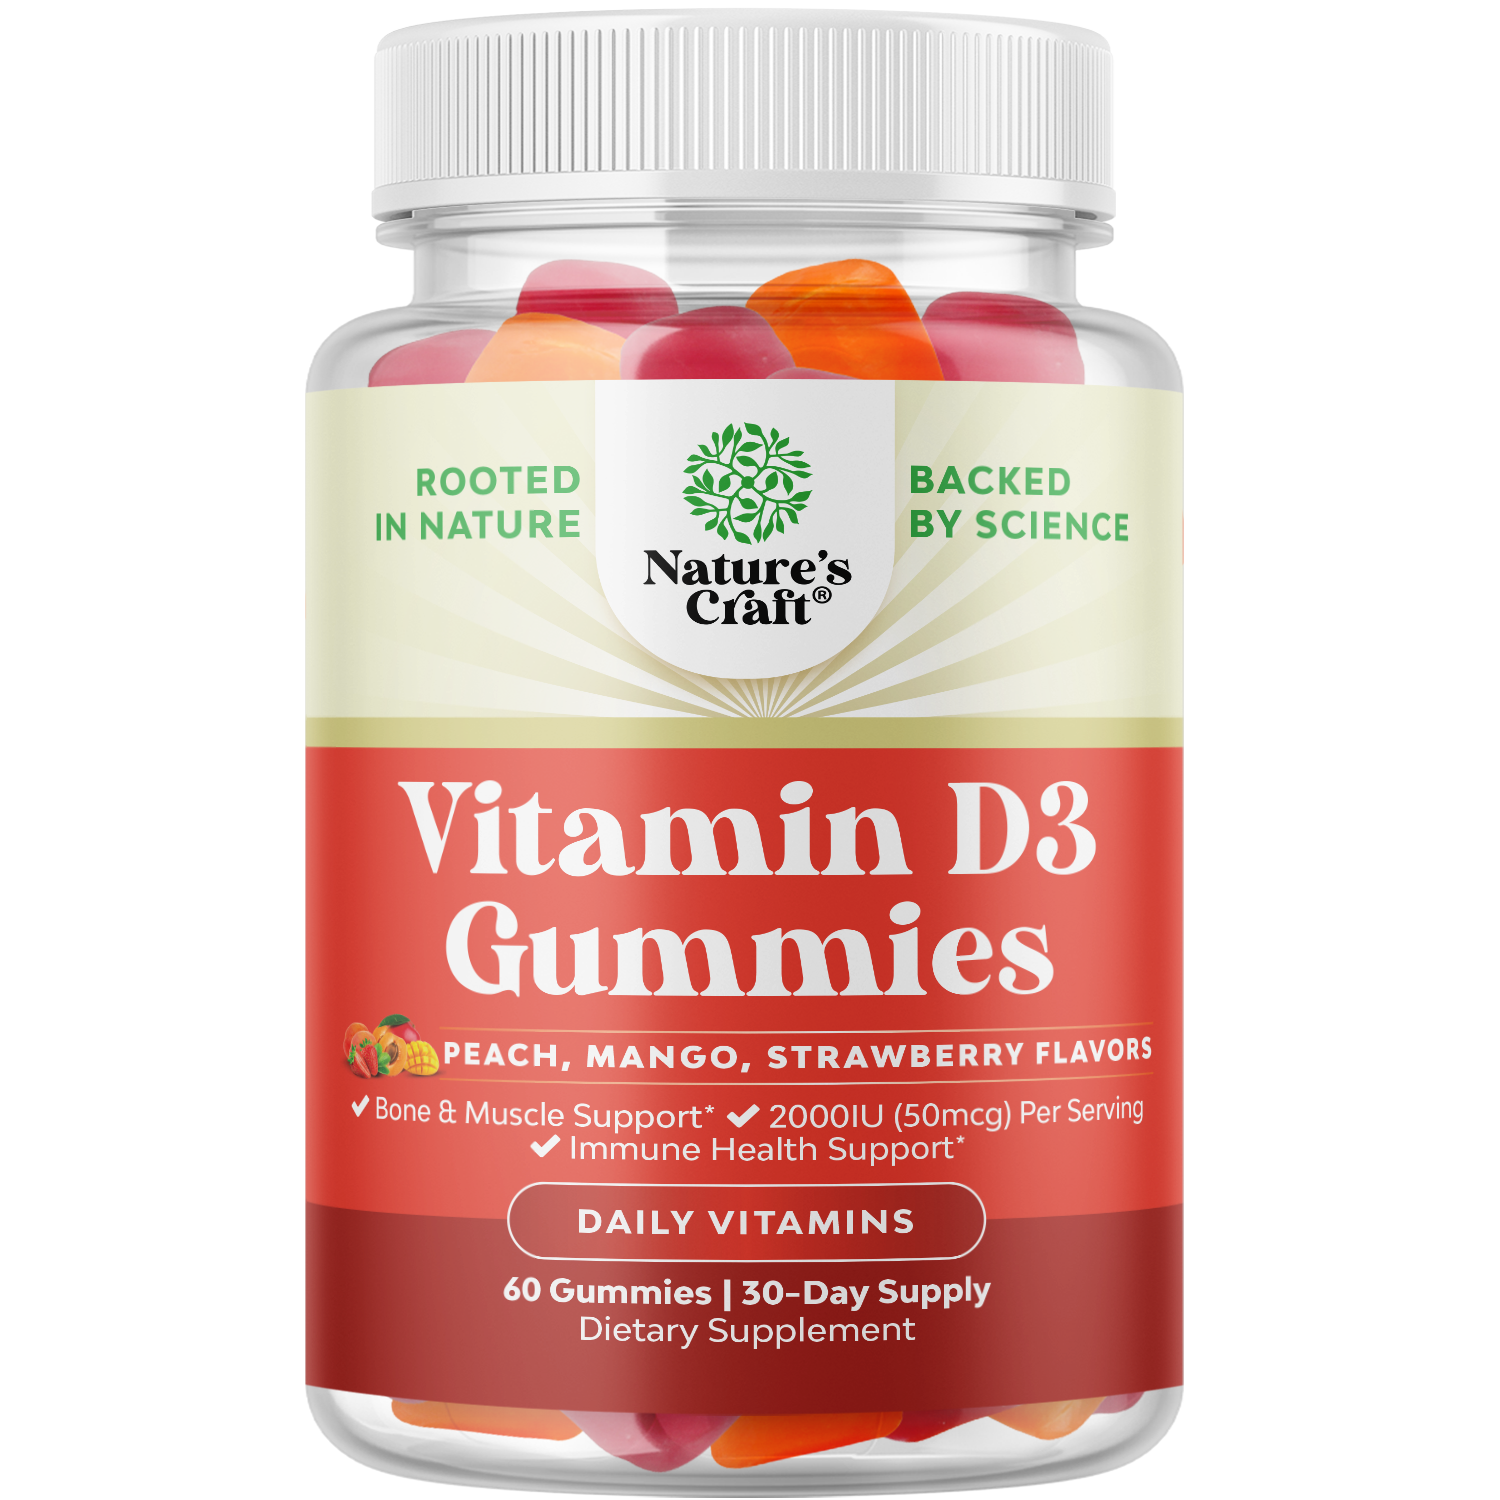 Vitamin D3 Gummies 2000IU per serving - 60 Gummies